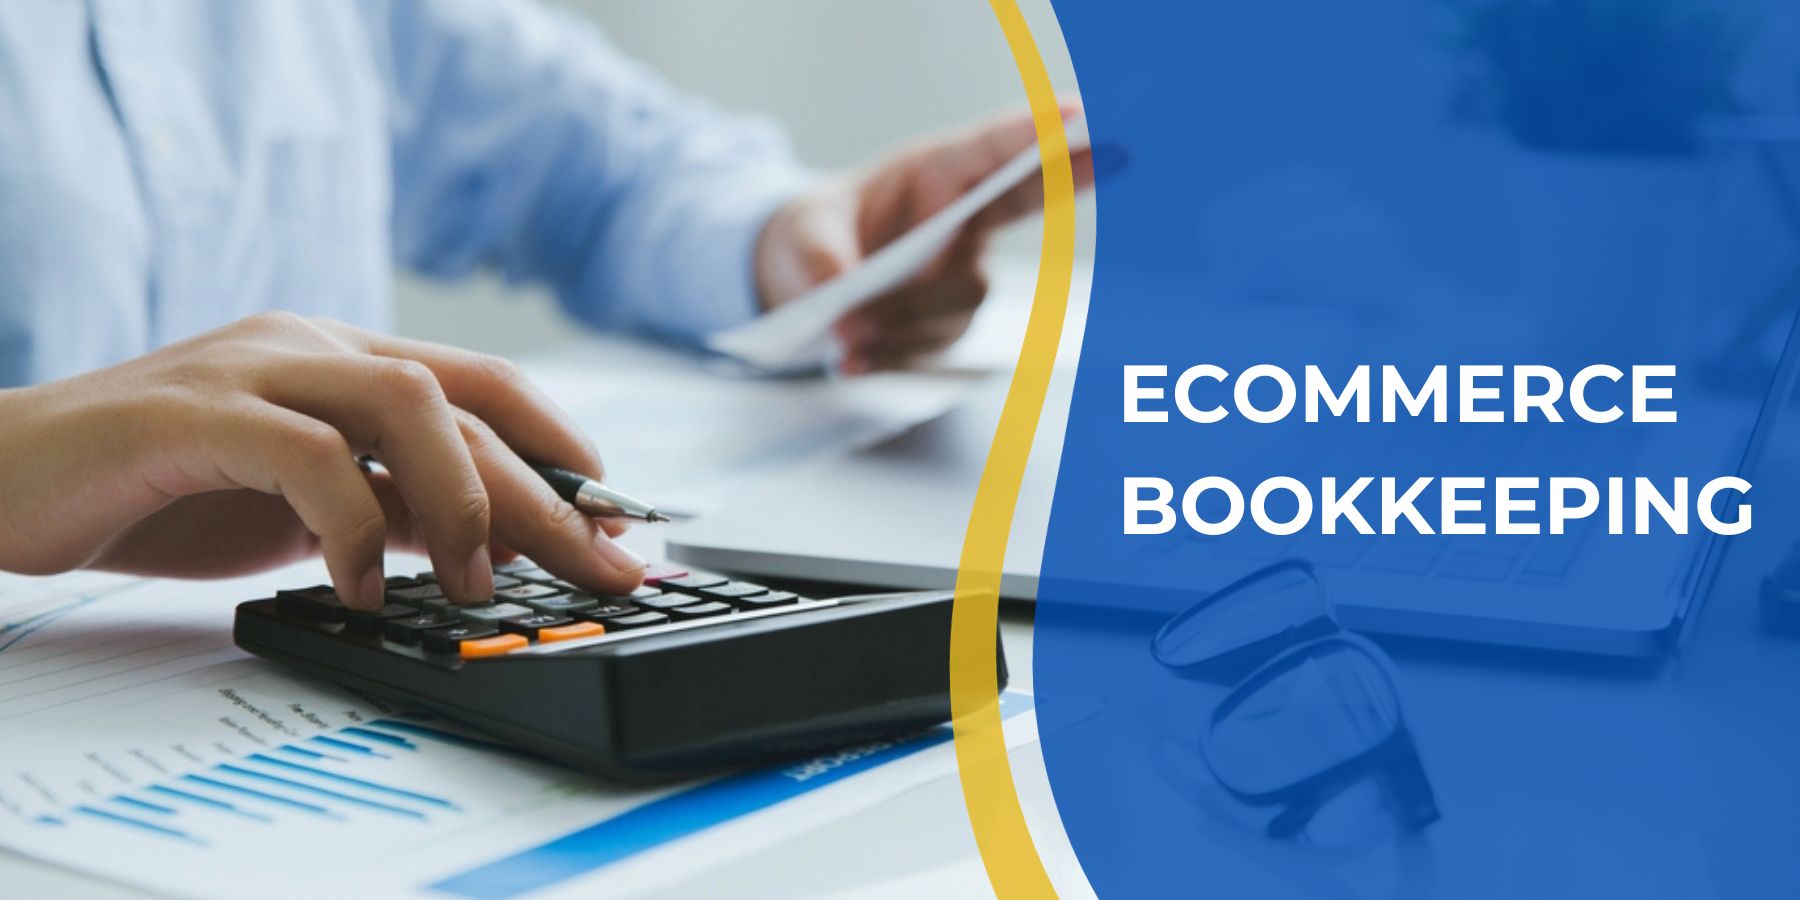 Ecom bookkeeping